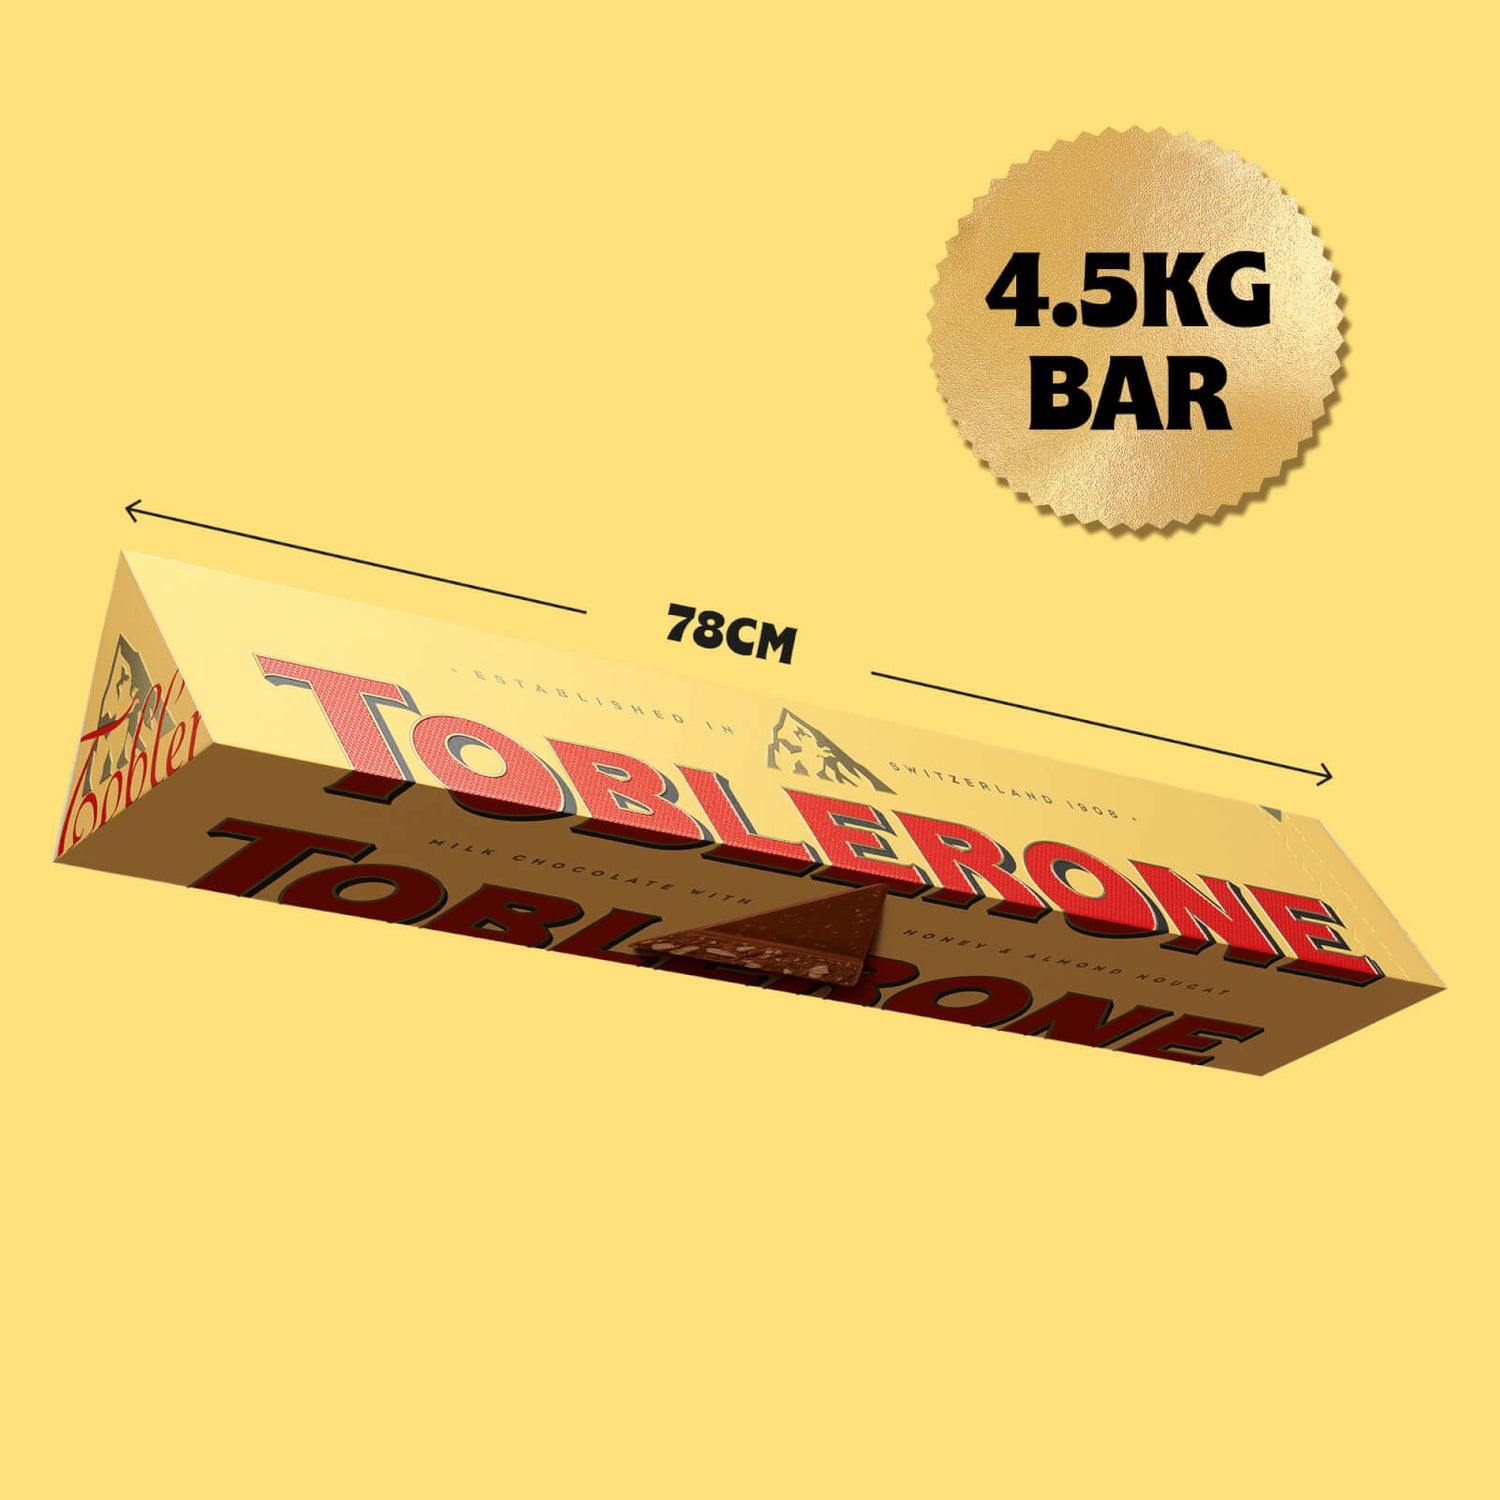 Giant Toblerone Bar - 4.5KG